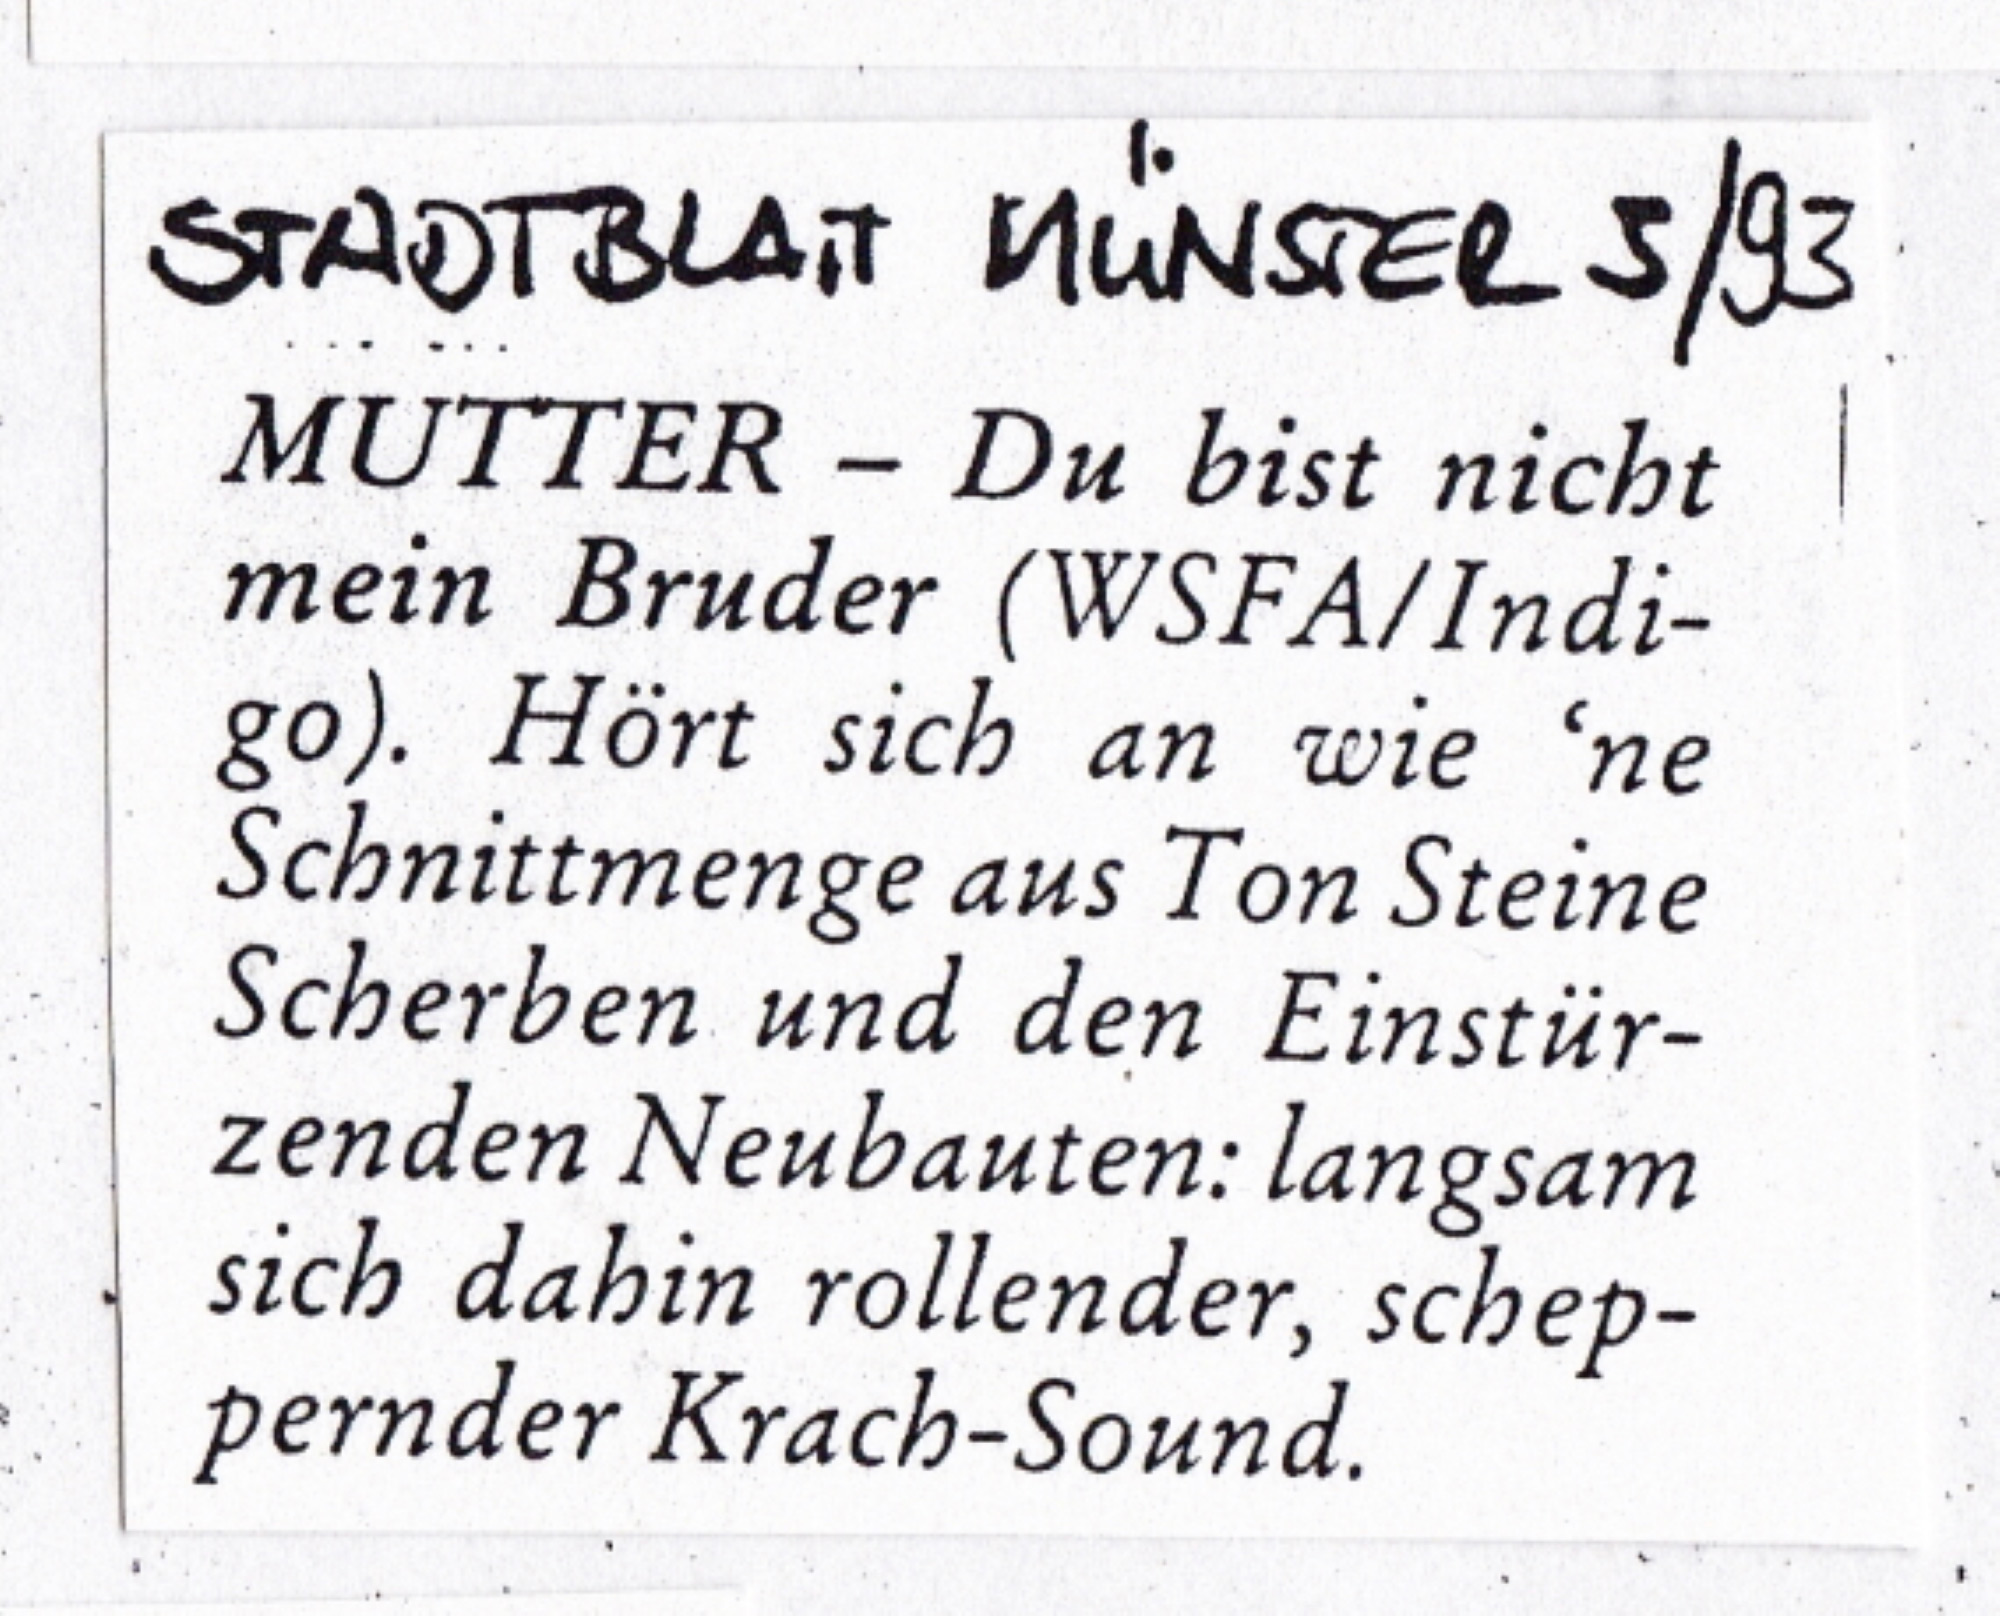 83-Stadtblatt-Münster-März-93